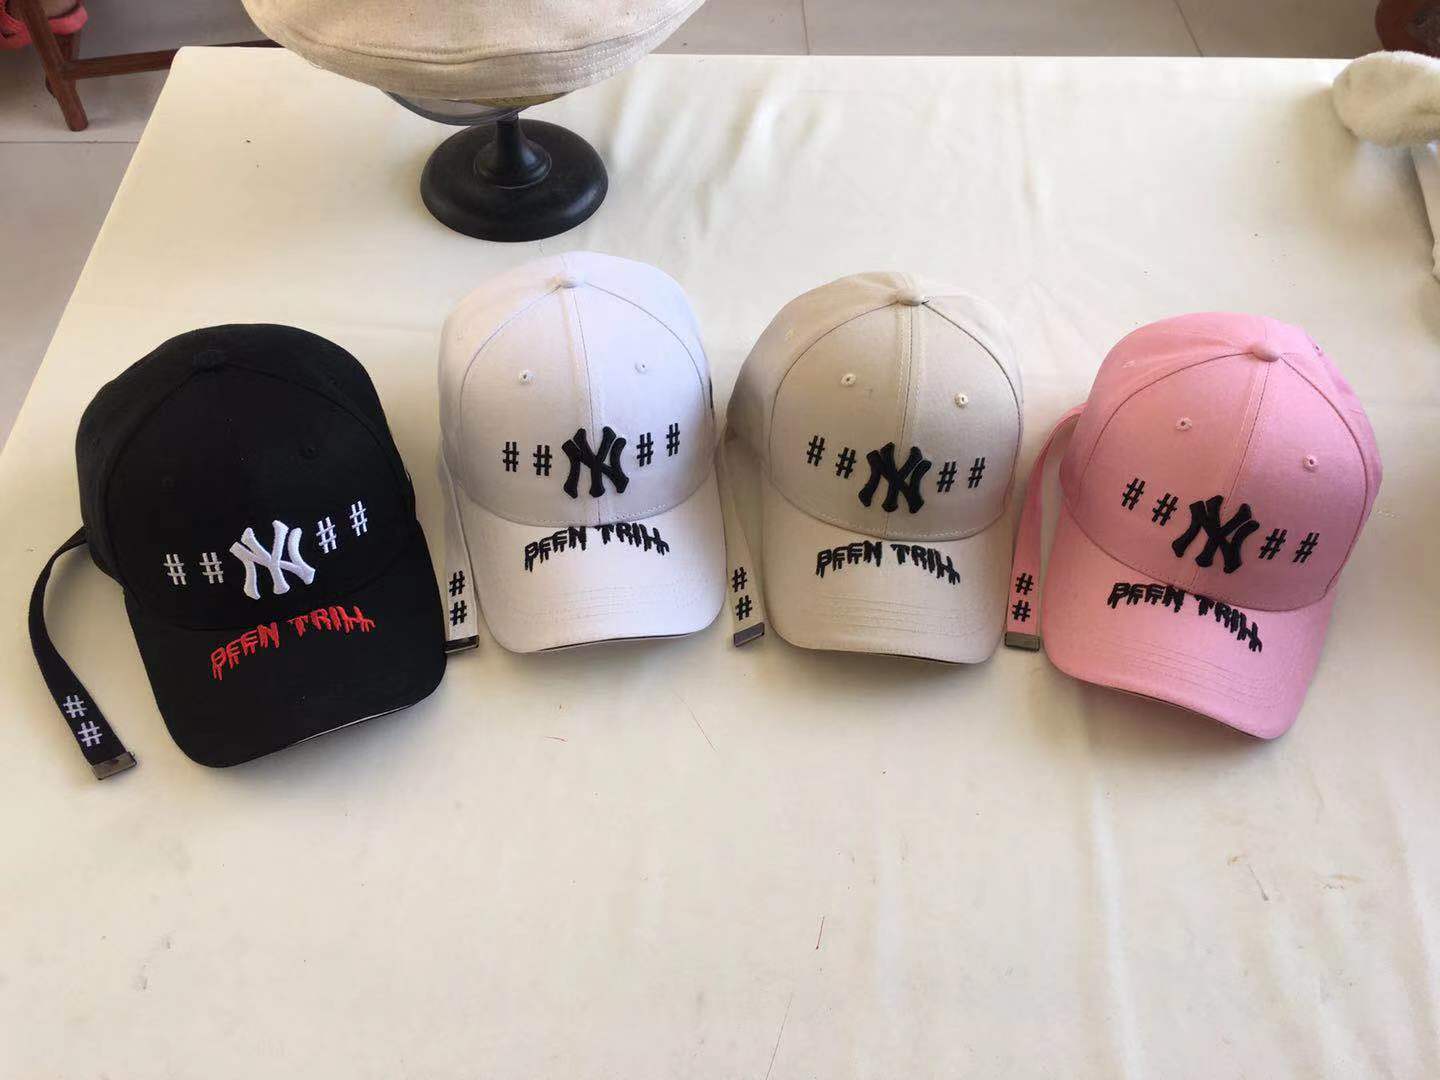 mlb new york yankees baseball cap wholesale